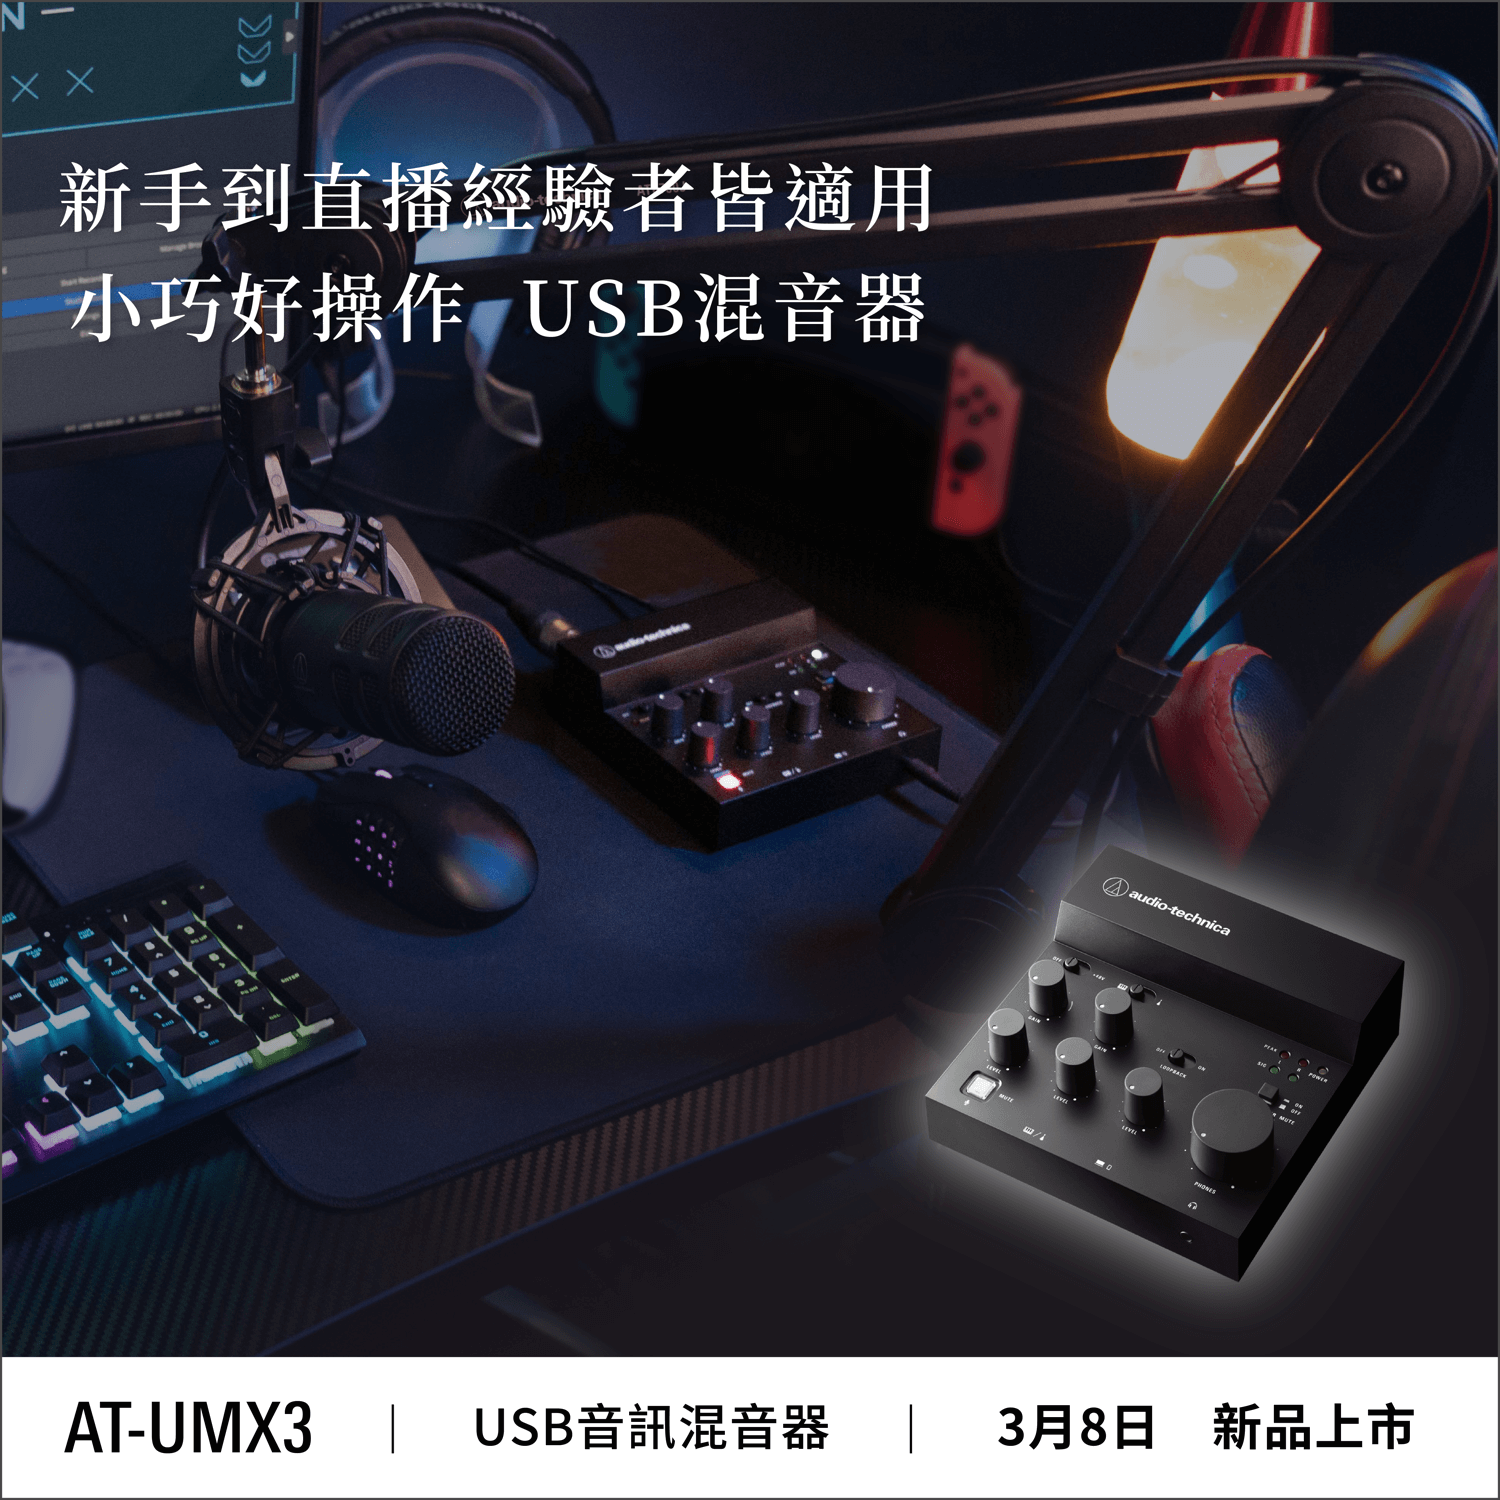 AT-UMX3 USB音訊混音器｜新品上市 | 恩典電腦官方網站